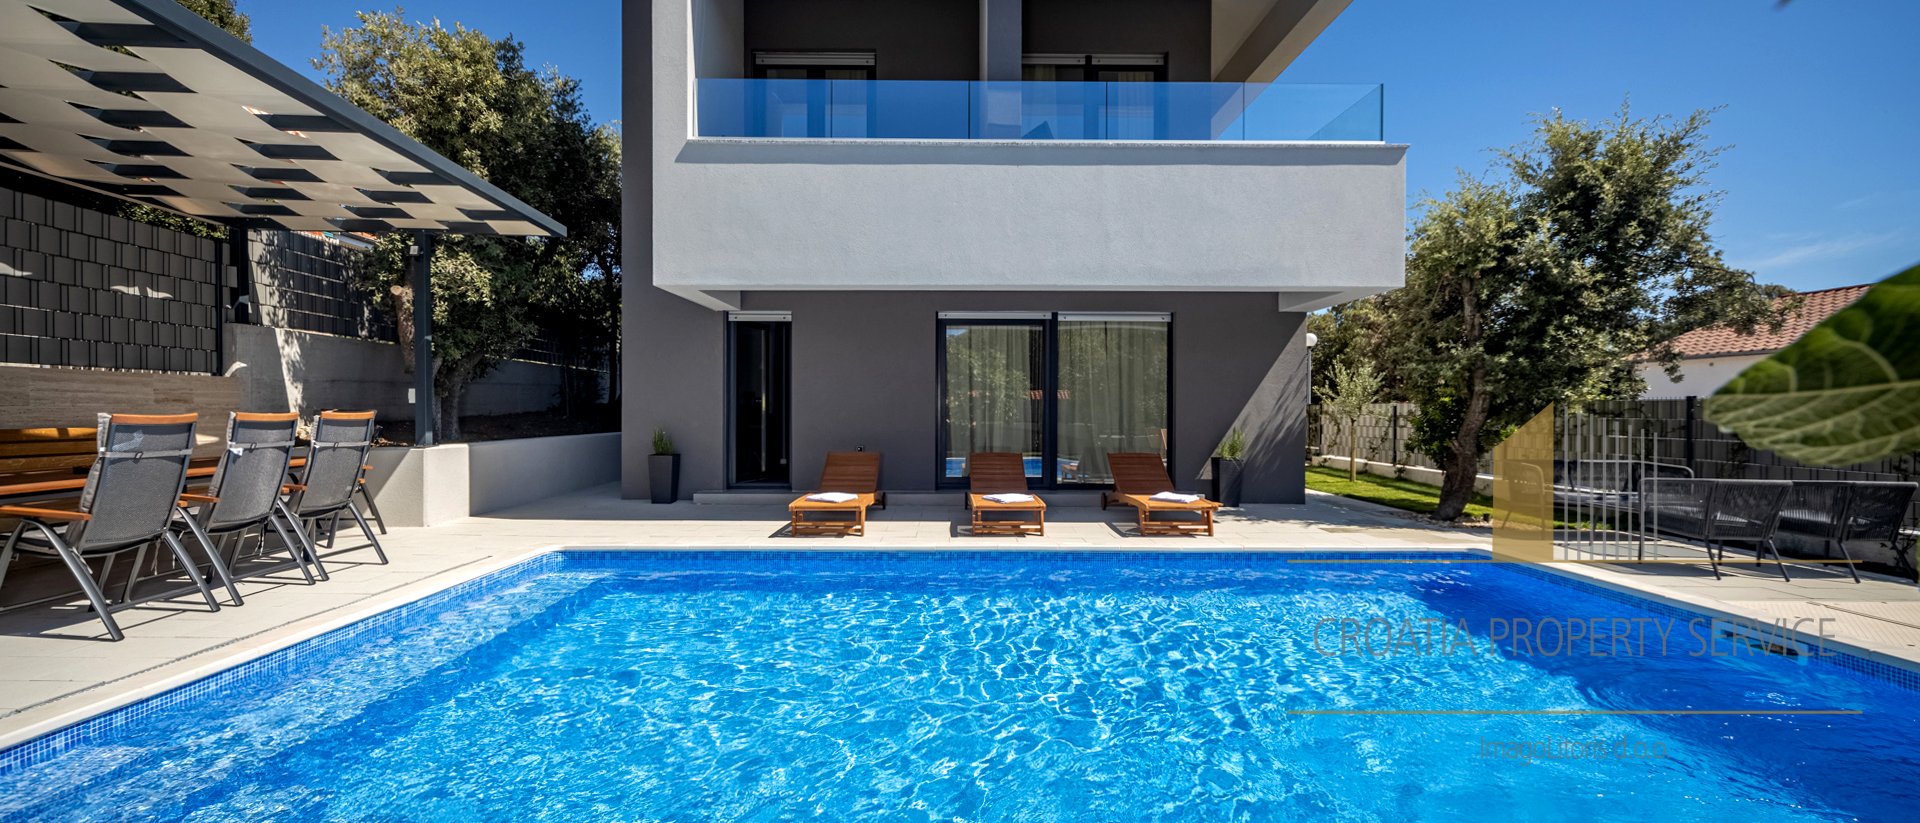 Luxury villa in a great location 50m from the beach near Zadar!